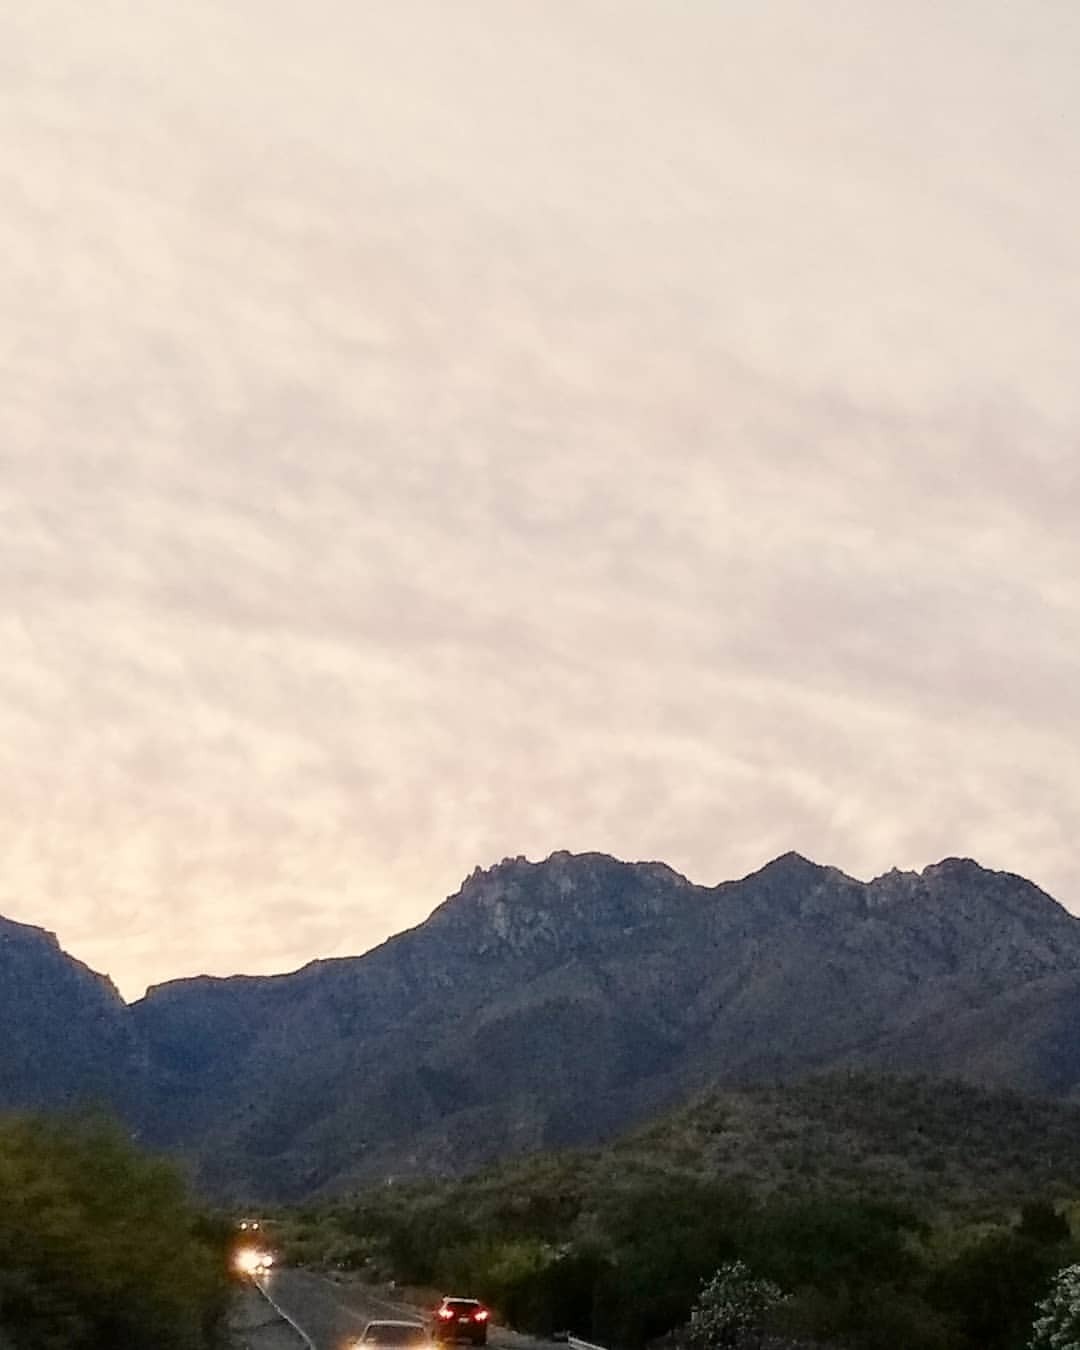 #tucson has some beautiful #mountains
https://www.instagram.com/p/BxppLUihDaA/?igshid=msv46wqtmxha